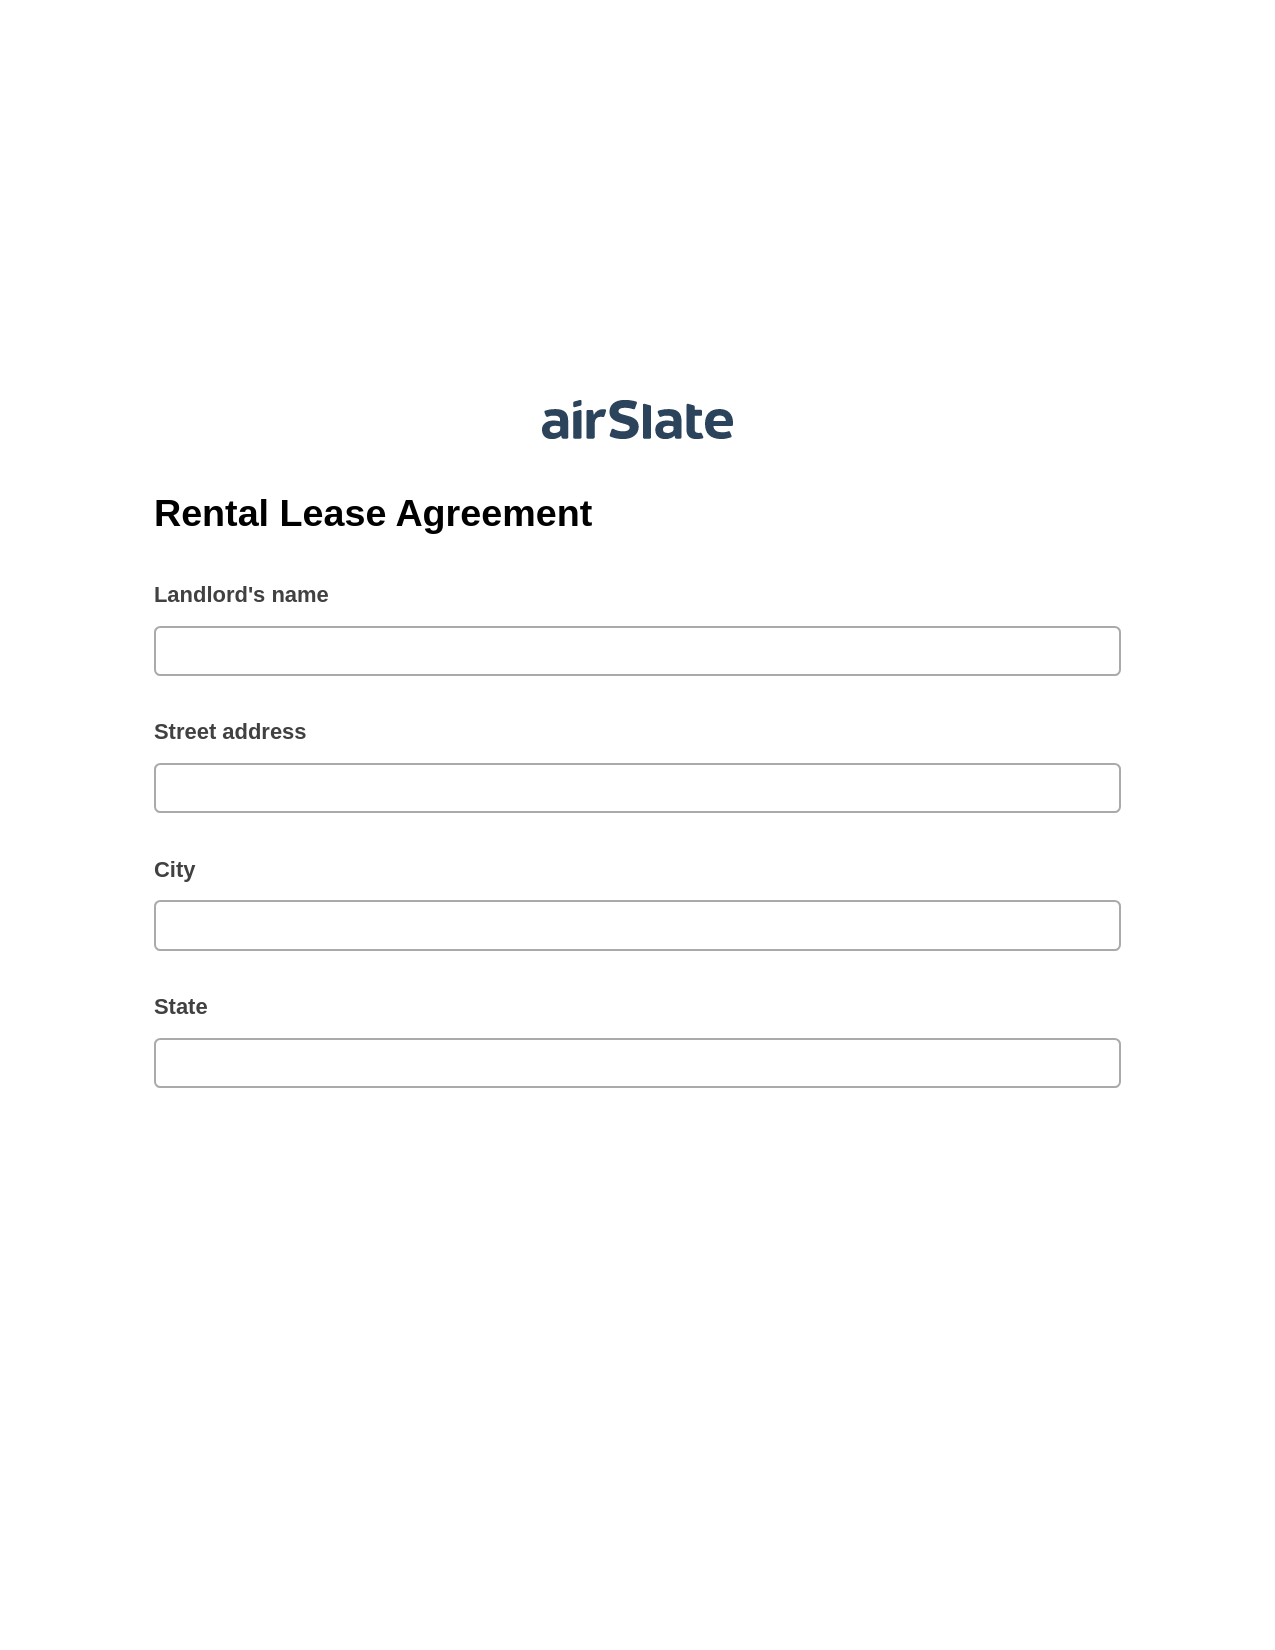 Rental Lease Agreement Pre-fill from MySQL Bot, Invoke Salesforce Process Bot, Archive to SharePoint Folder Bot